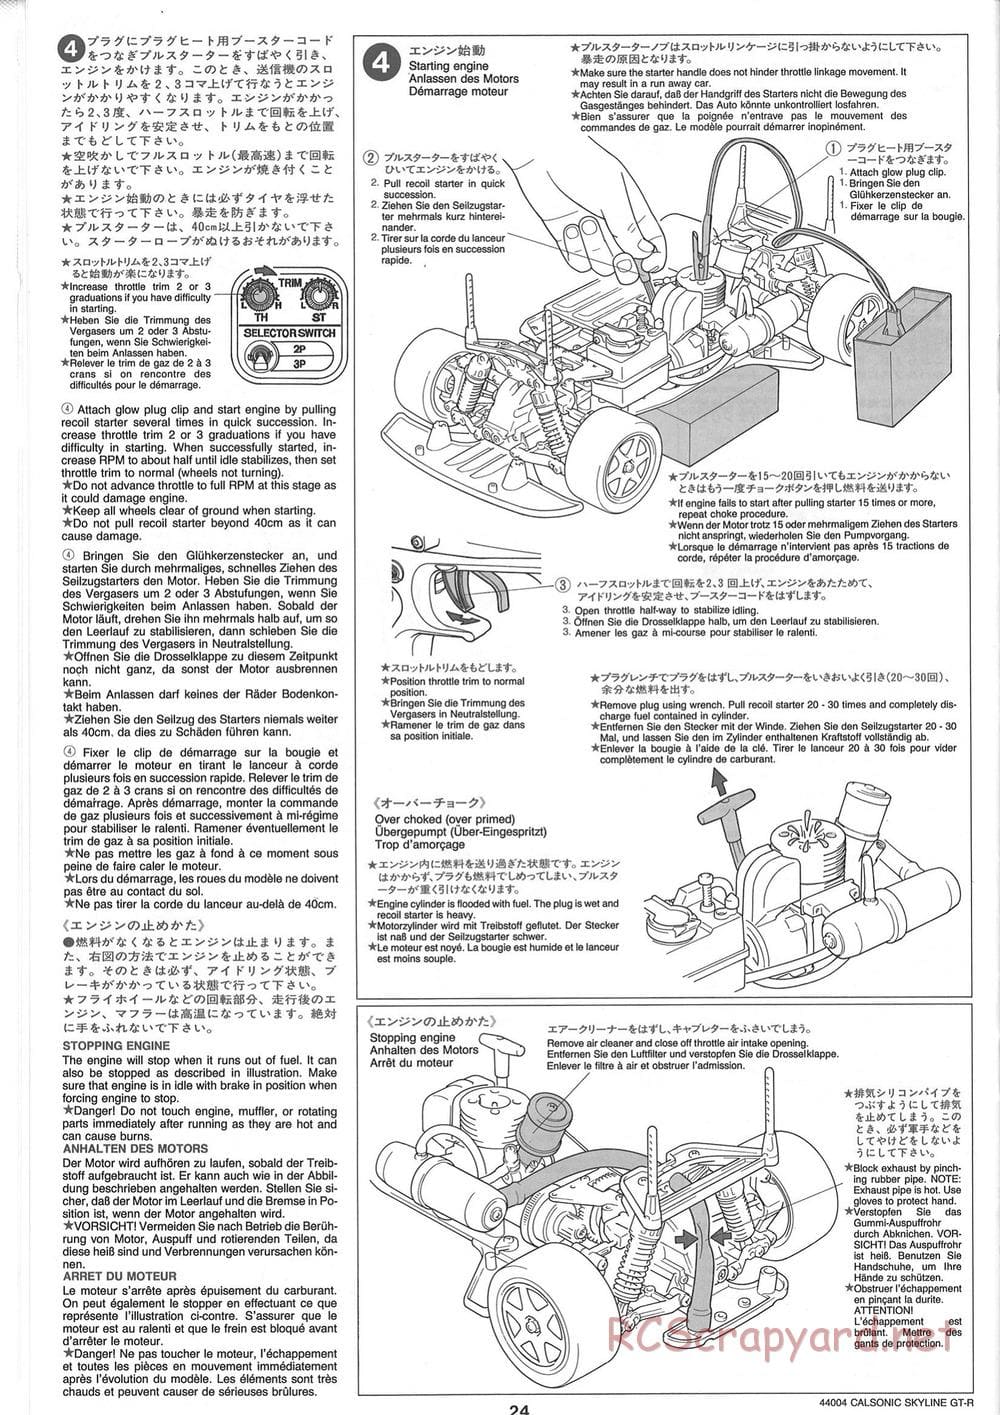 Tamiya - Calsonic GT-R - TGX Mk.1 Chassis - Manual - Page 24